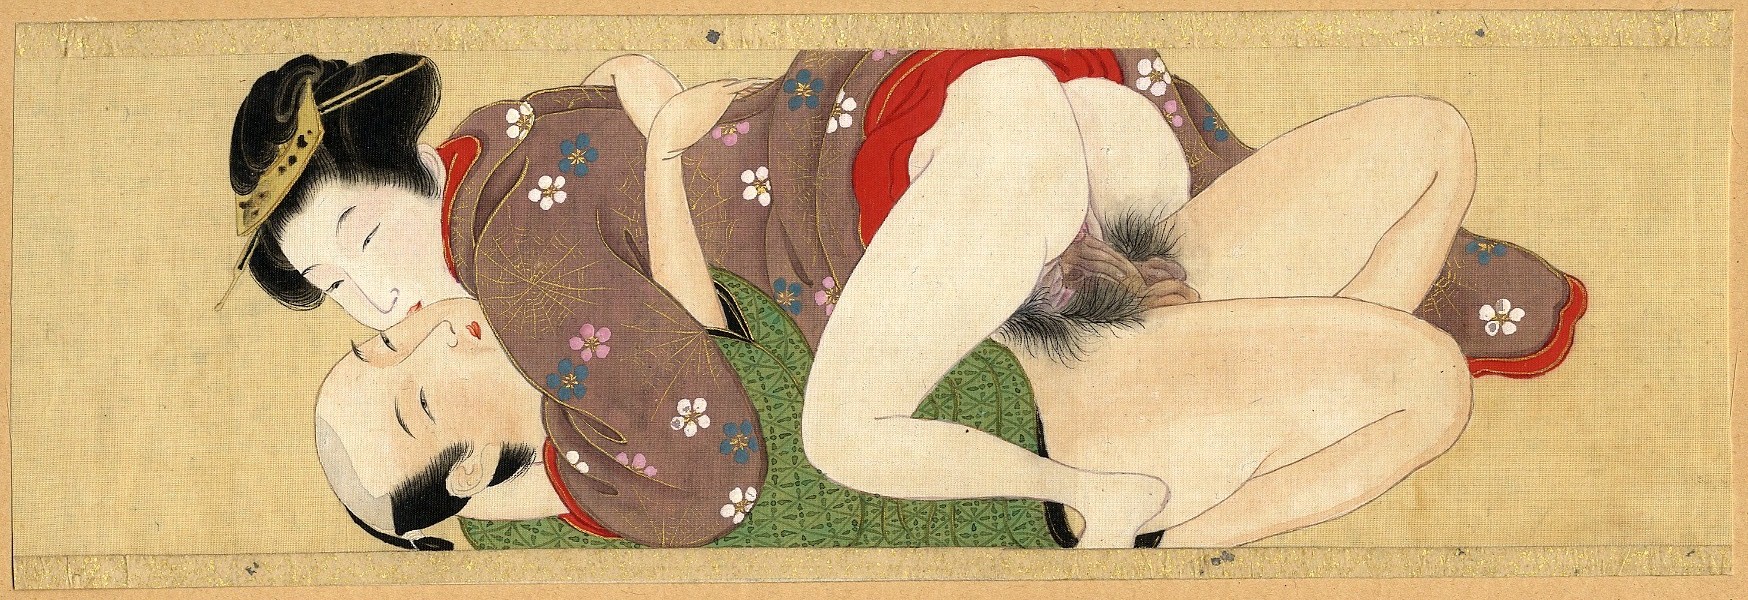 эротика японских рисунках фото 112